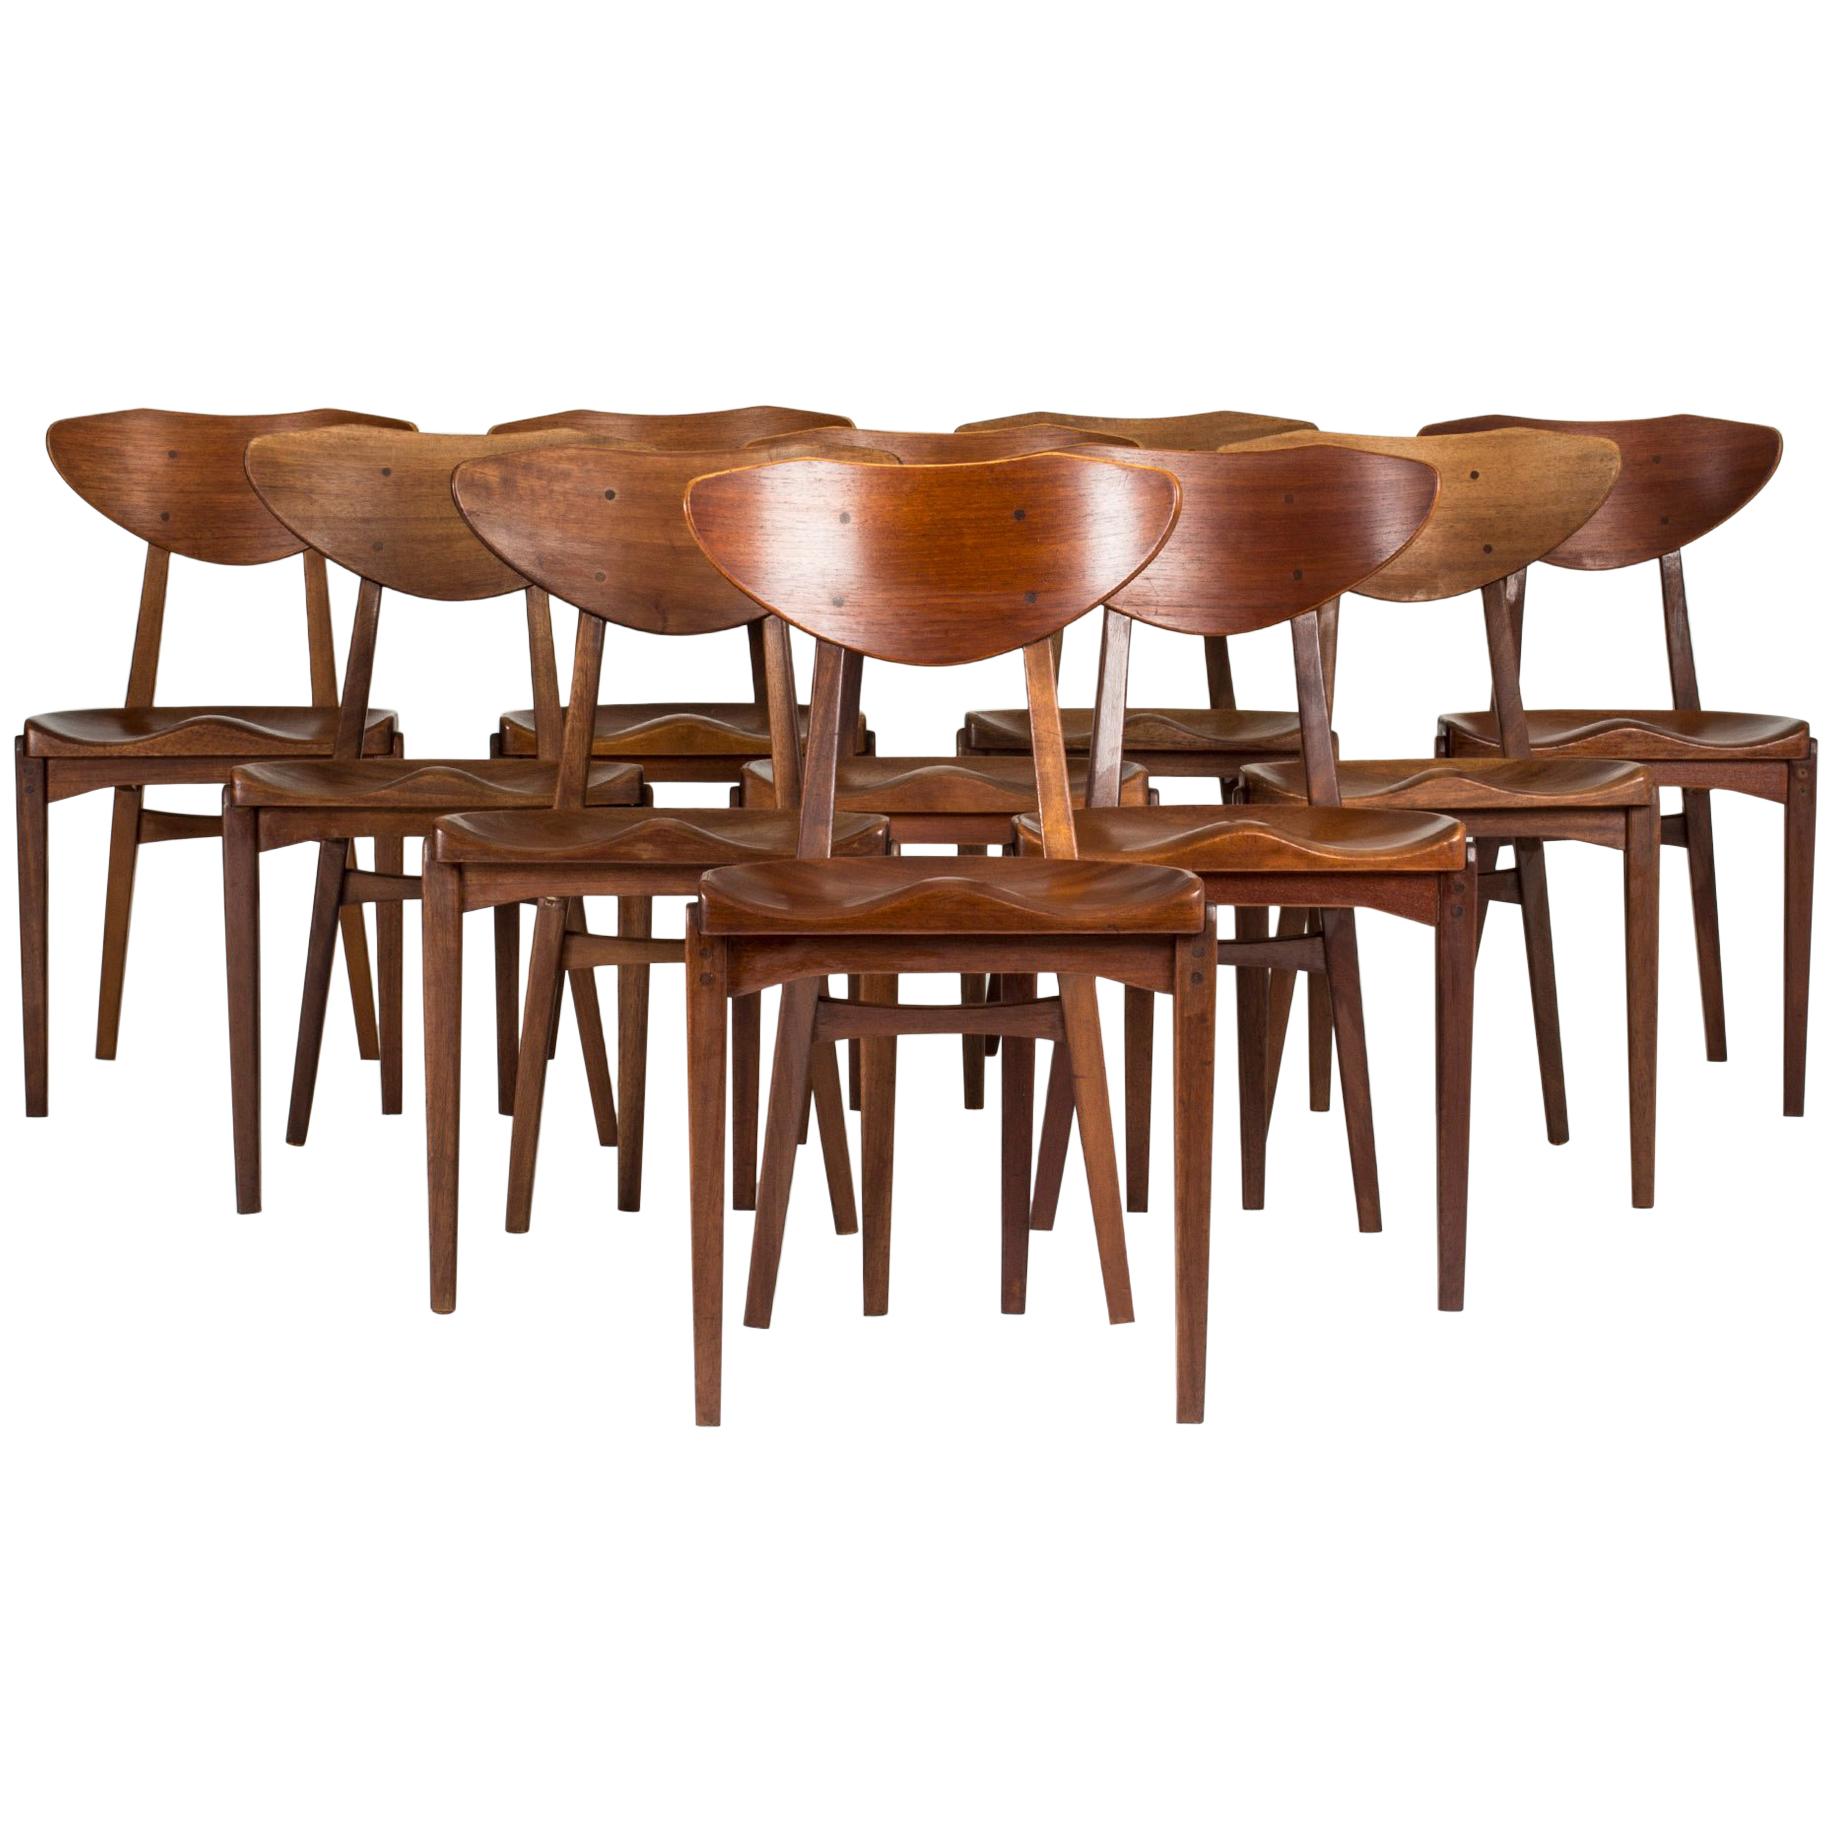 Set of Ten 1950s Dining Chairs by Richard Jensen and Kjærulff Rasmussen